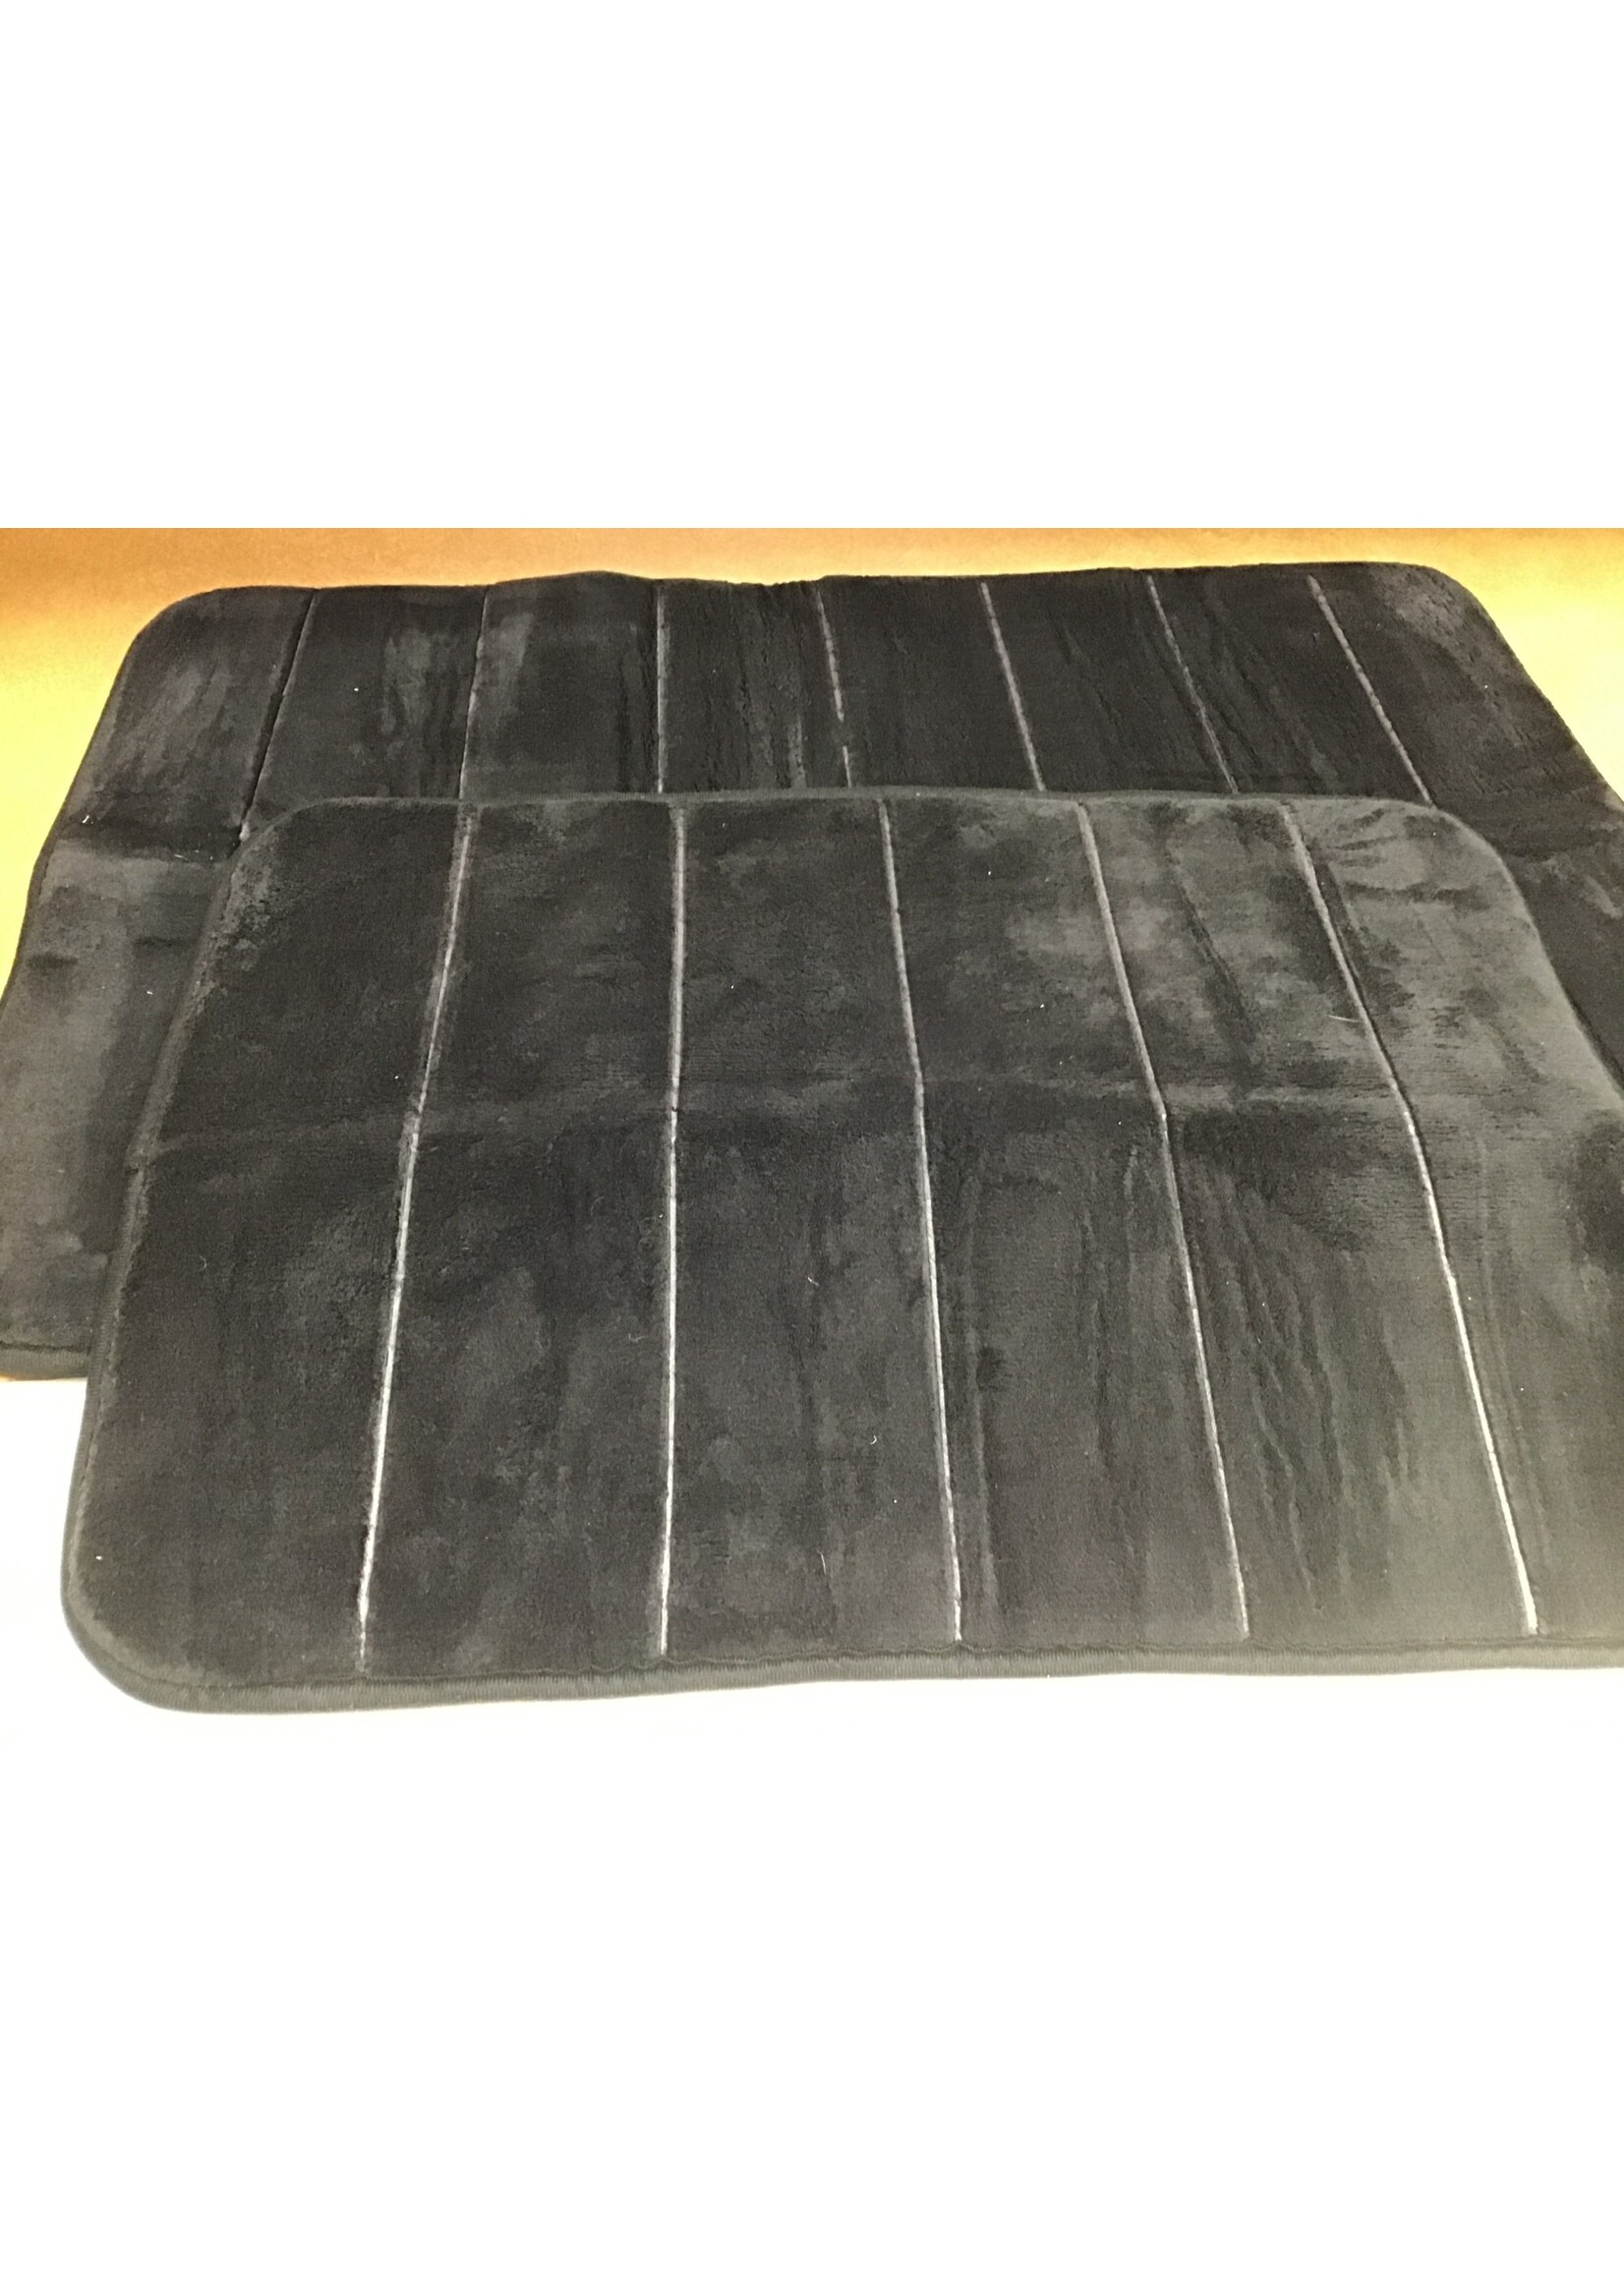 Yimobra Bathrrom Rugs Set 2 Piece 17x24+31.5x19.8 inches black absorbent memory foam